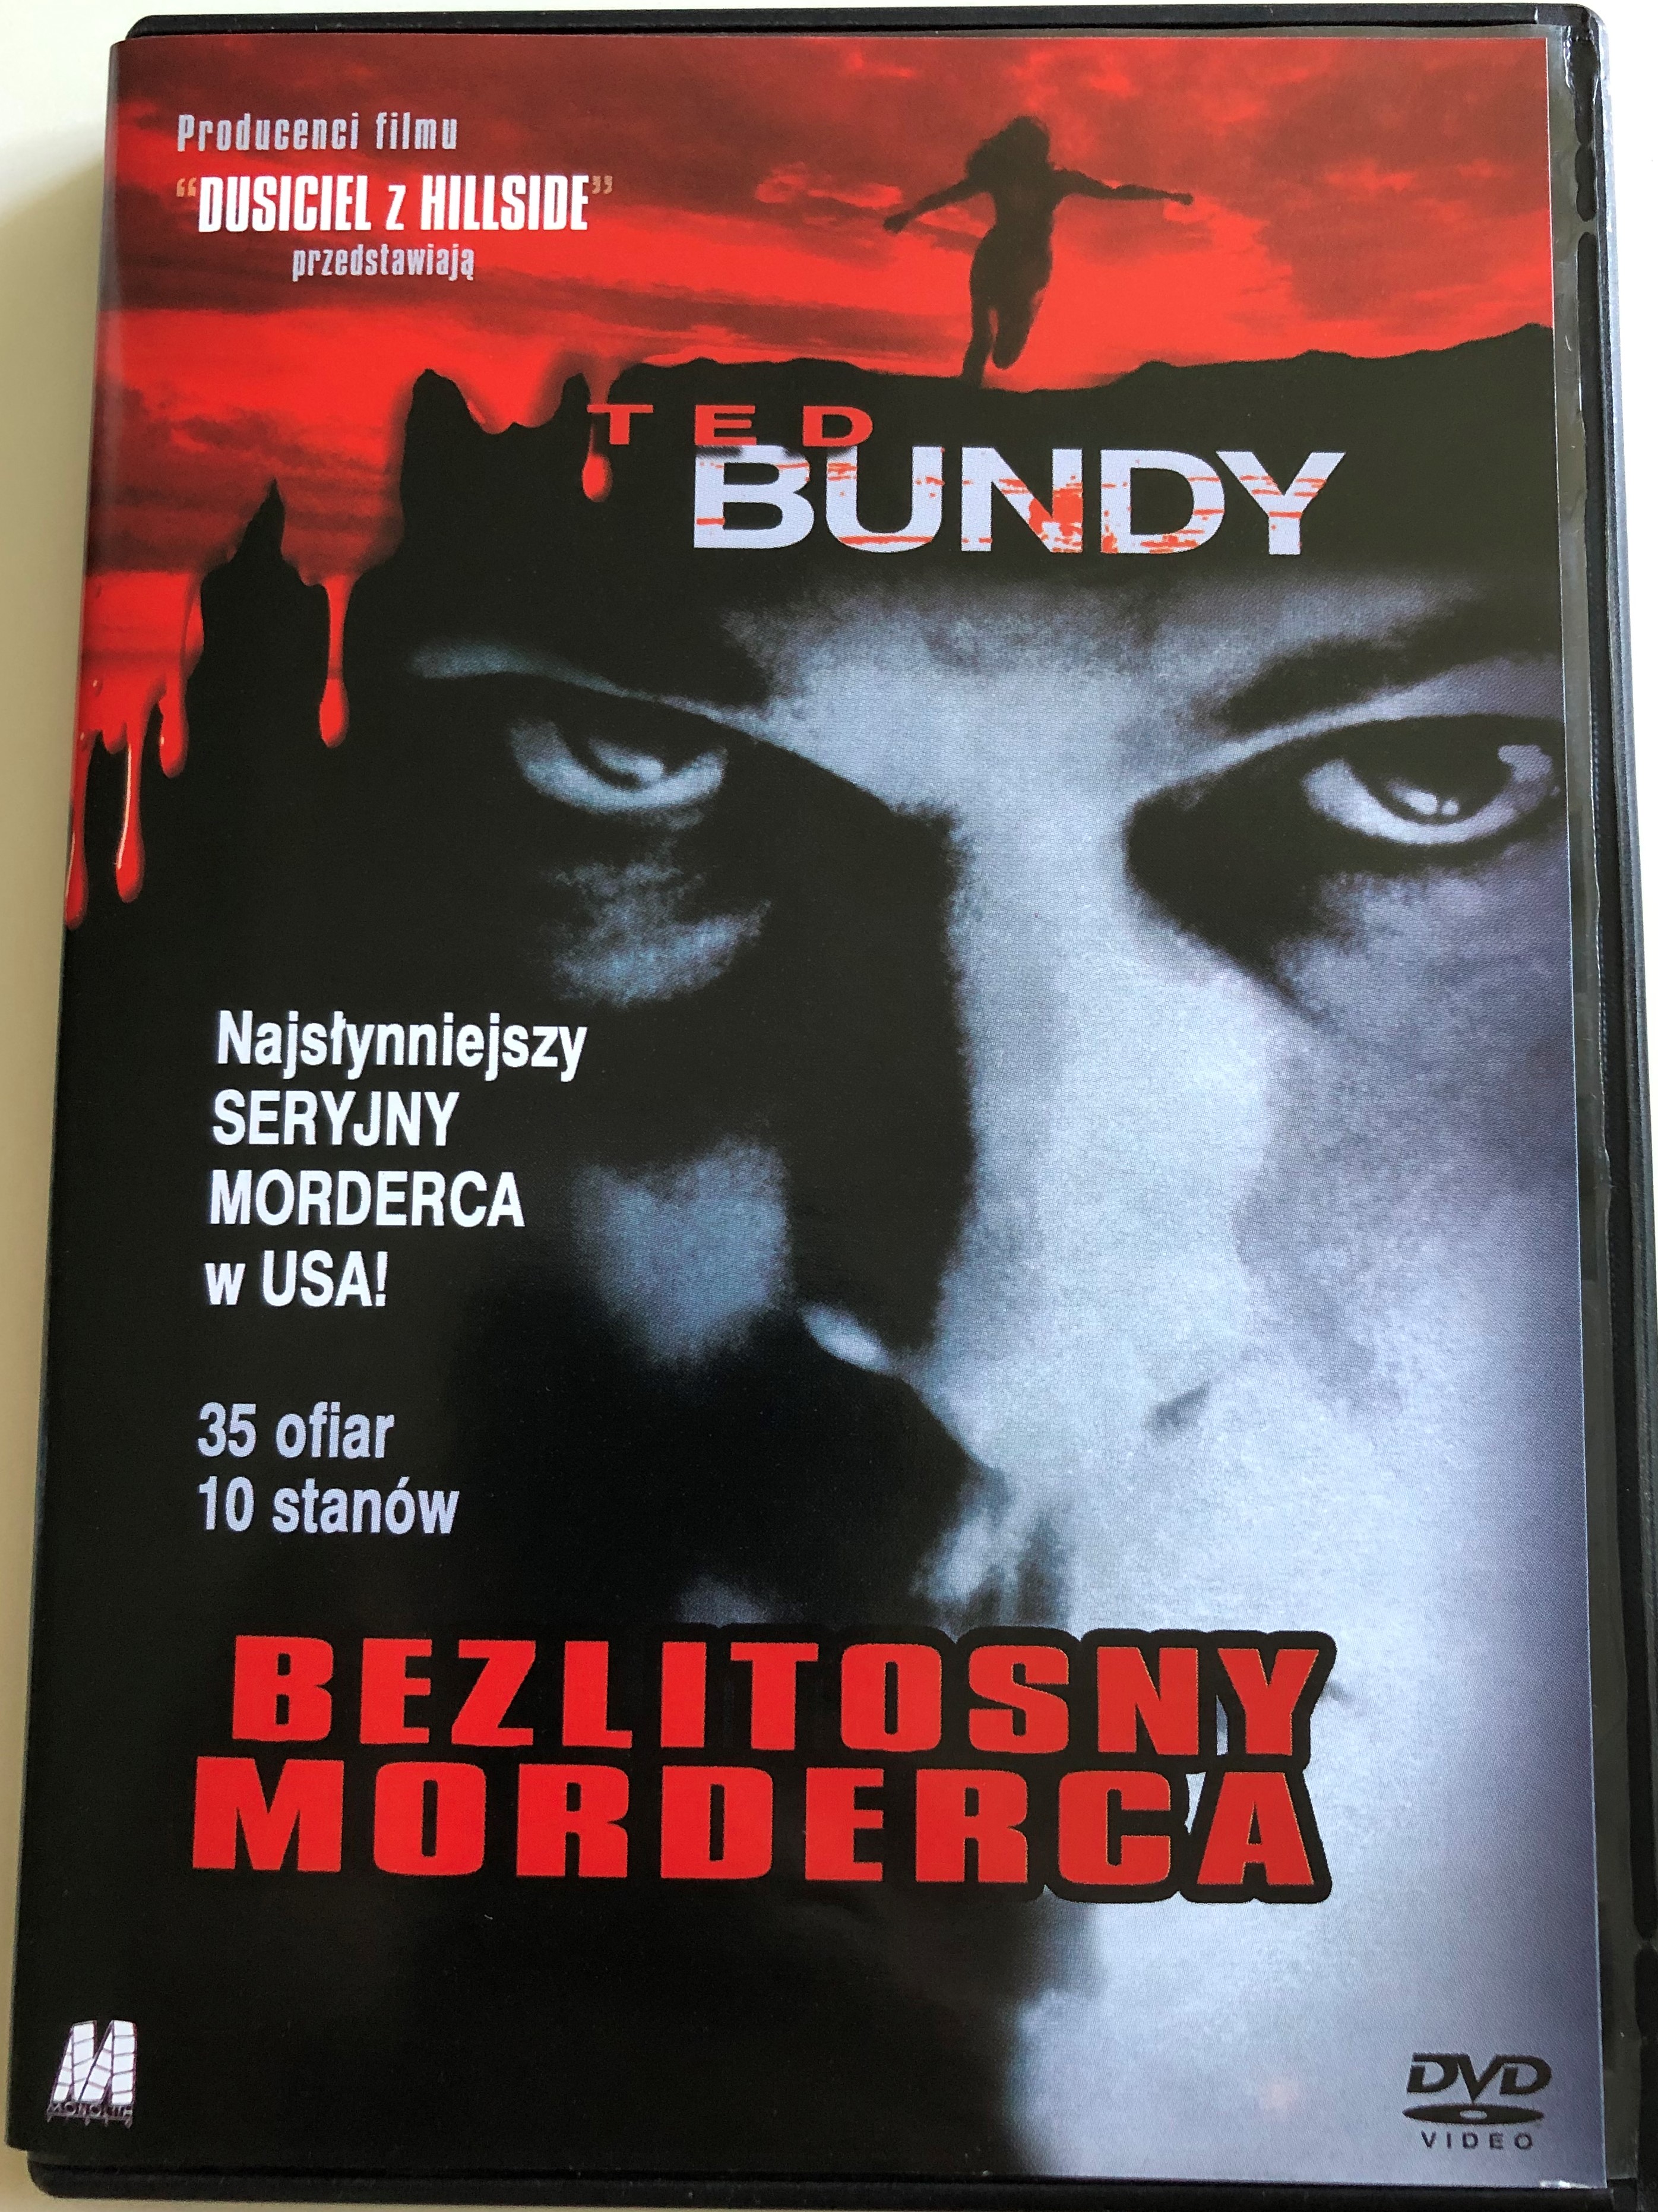 ted-bundy-dvd-2002-bezlitosny-morderca-directed-by-matthew-bright-starring-michael-reilly-burke-boti-ann-bliss-alexa-jago-tom-savini-najslynniejszy-seryjny-morderca-w-usa-1-.jpg